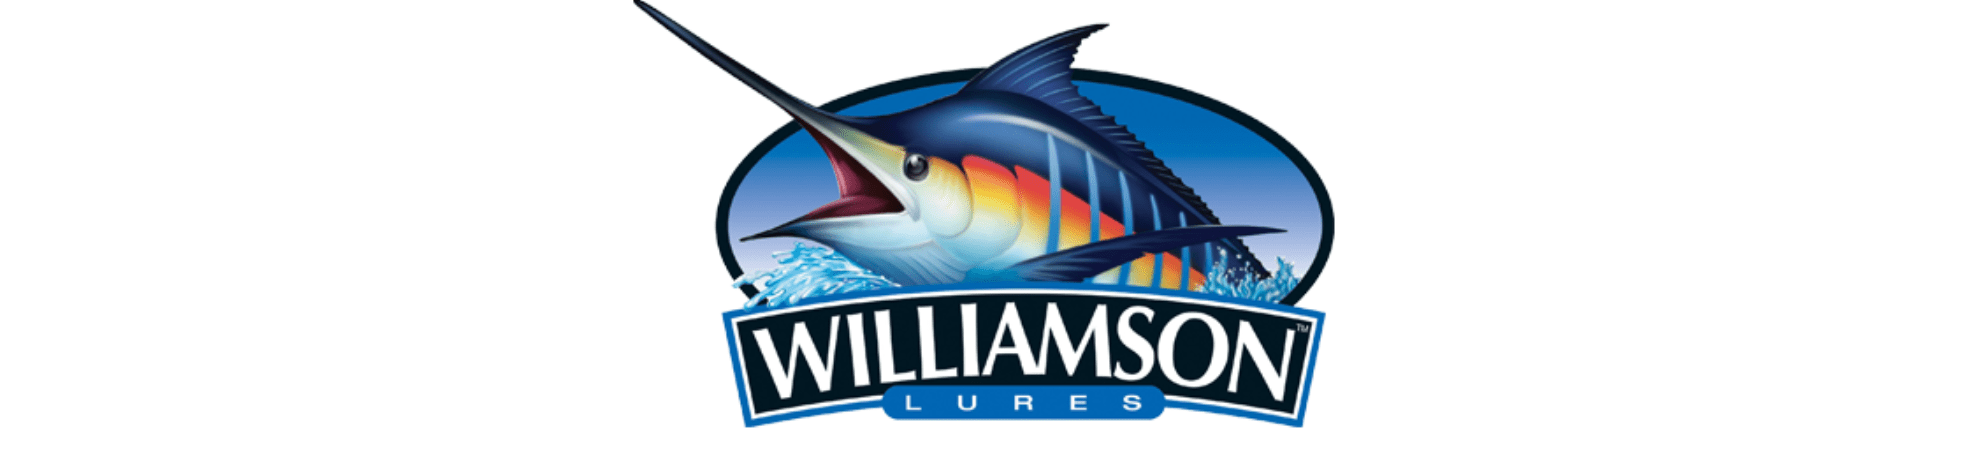 Williamson - fishermanshub